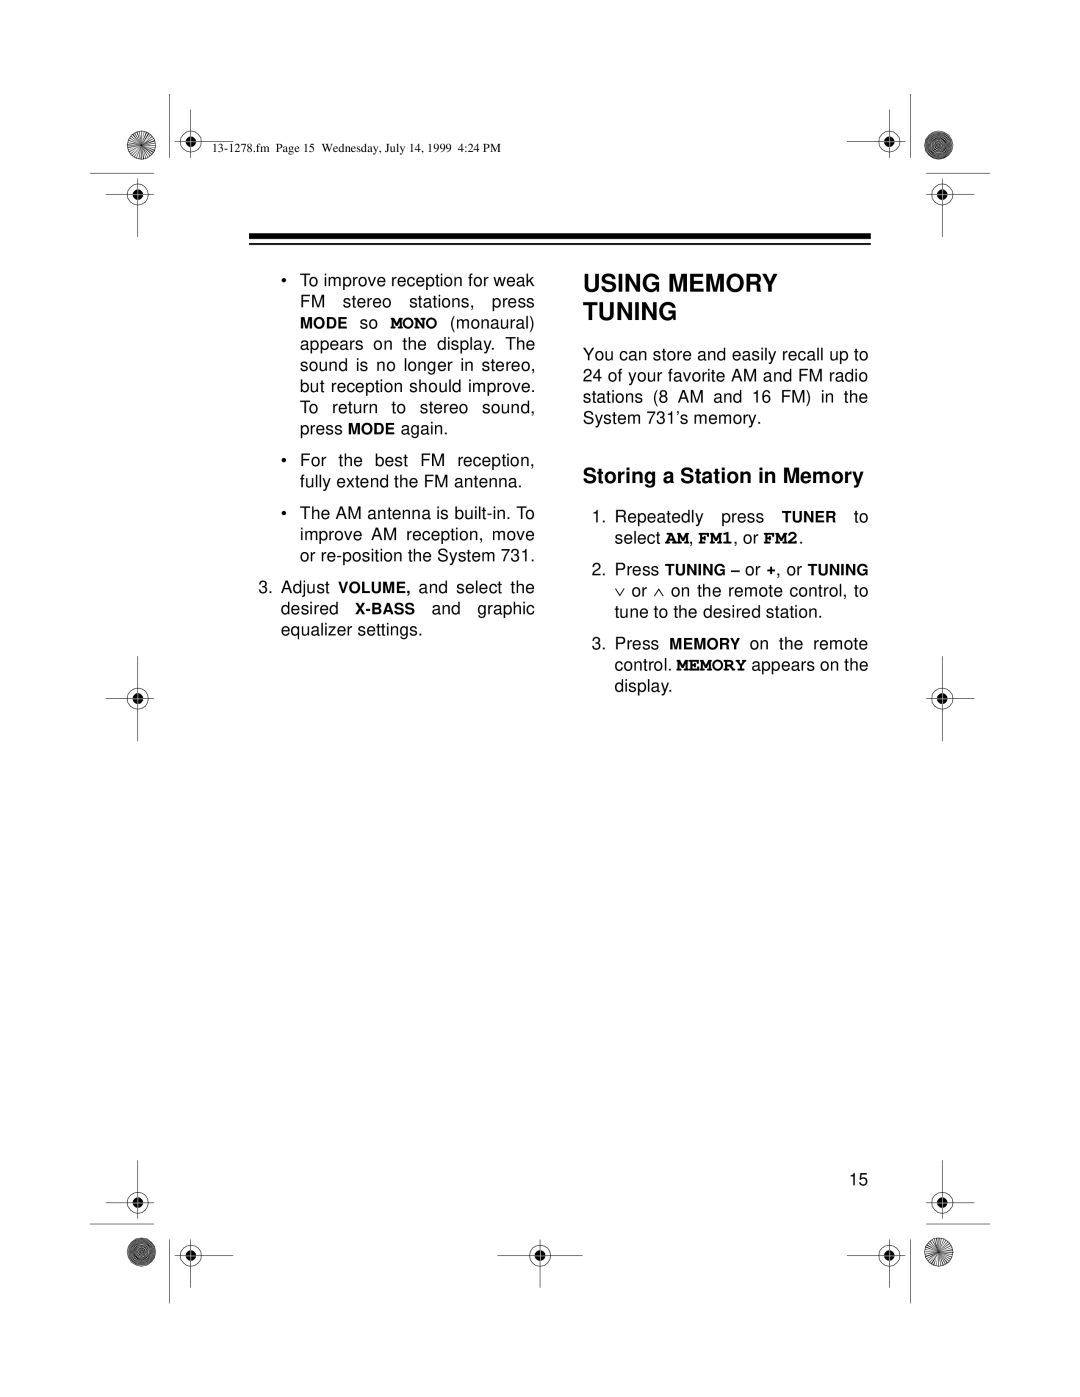 Optimus 731 owner manual Using Memory Tuning, Storing a Station in Memory 